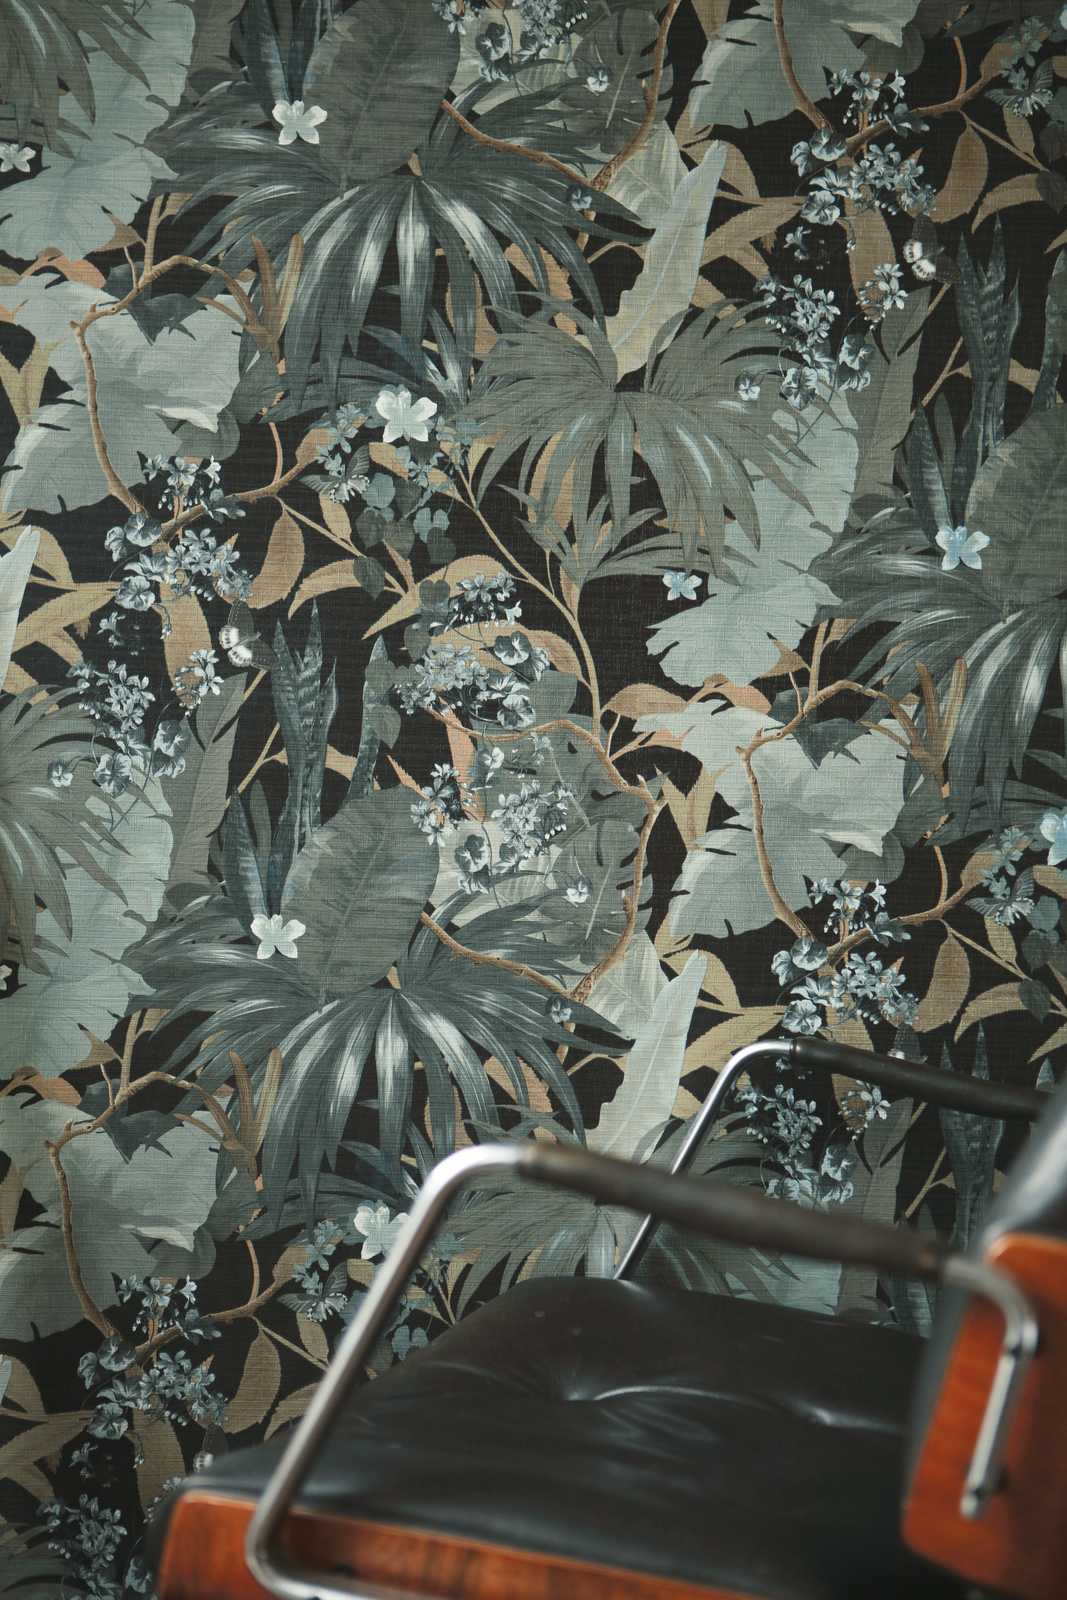             Wallpaper jungle design with leaf pattern - grey, green
        